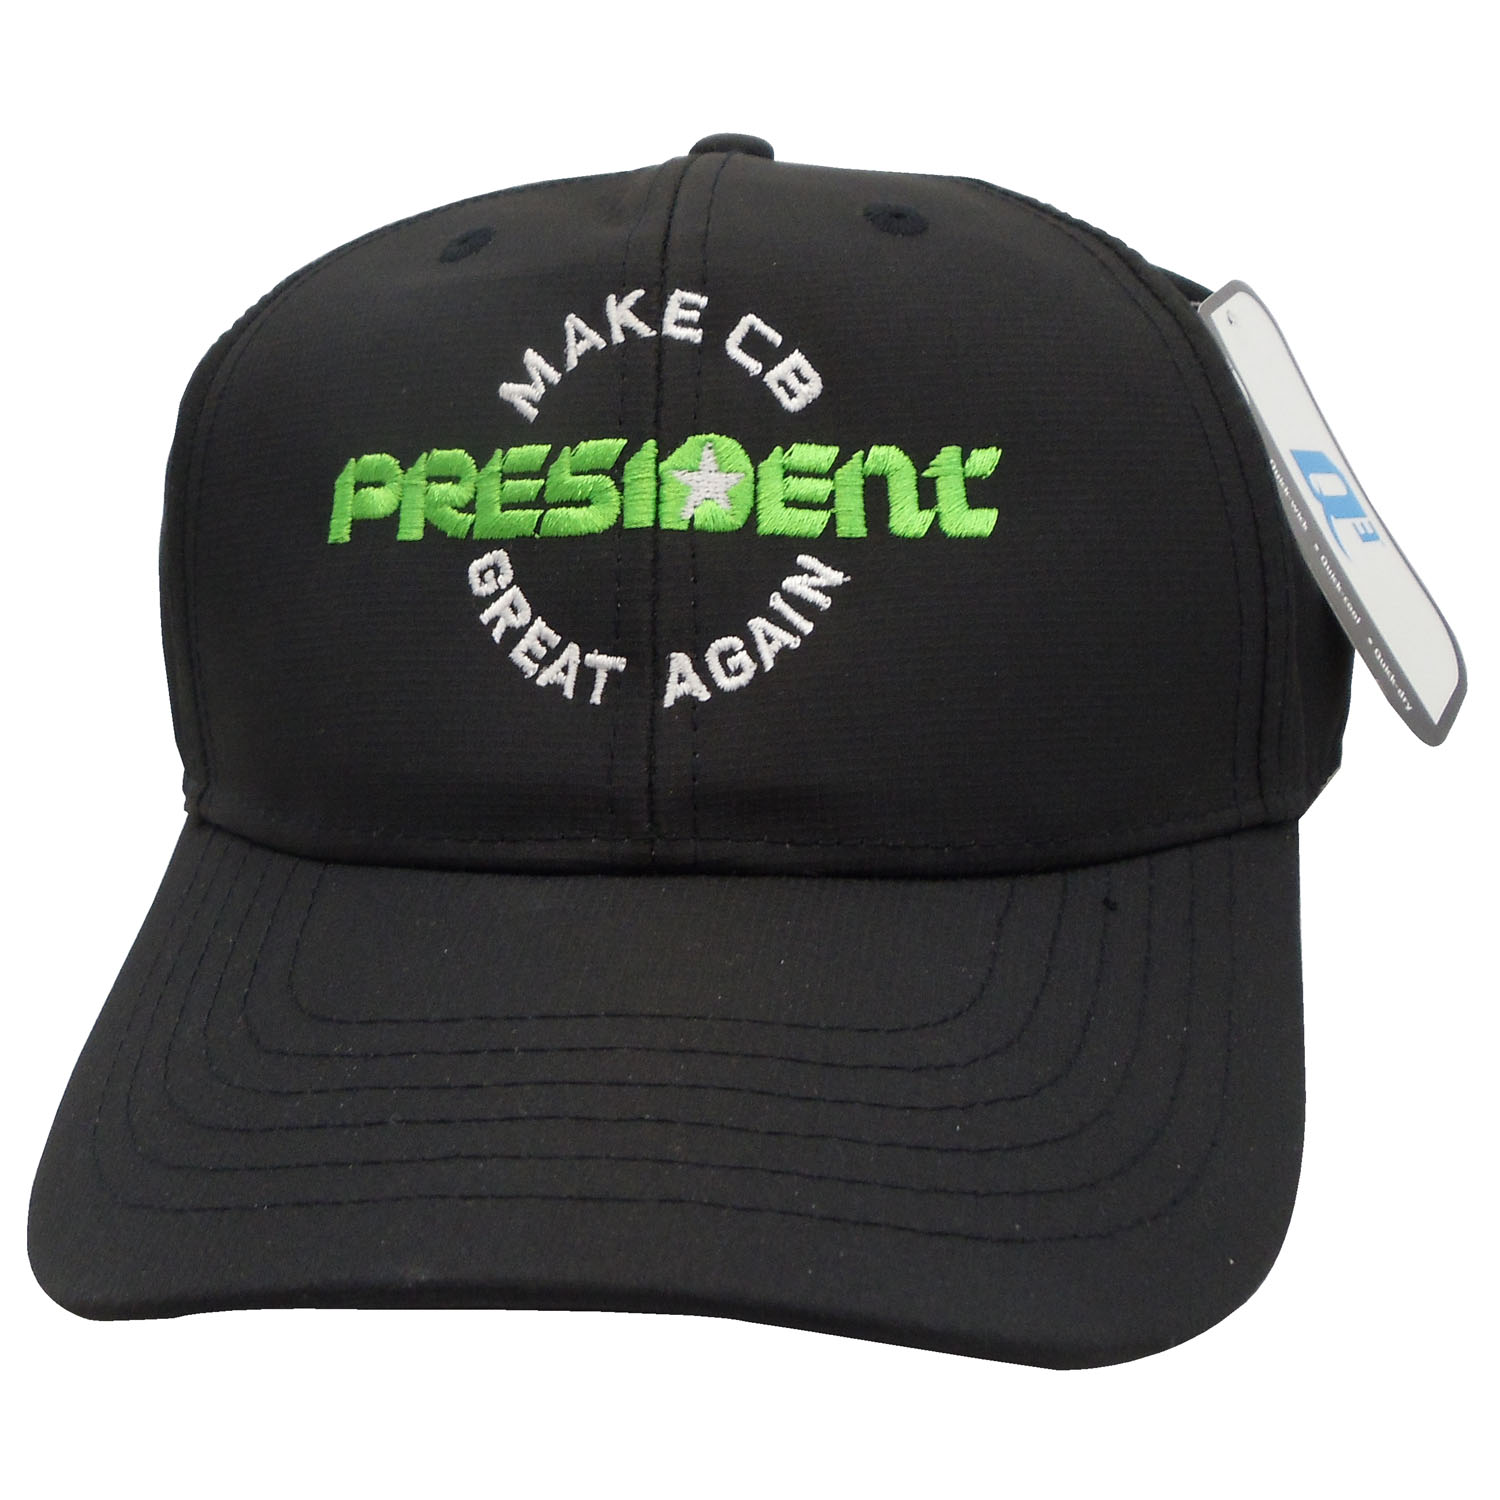 President Logo  "Make Cb Great Again" Black Cap